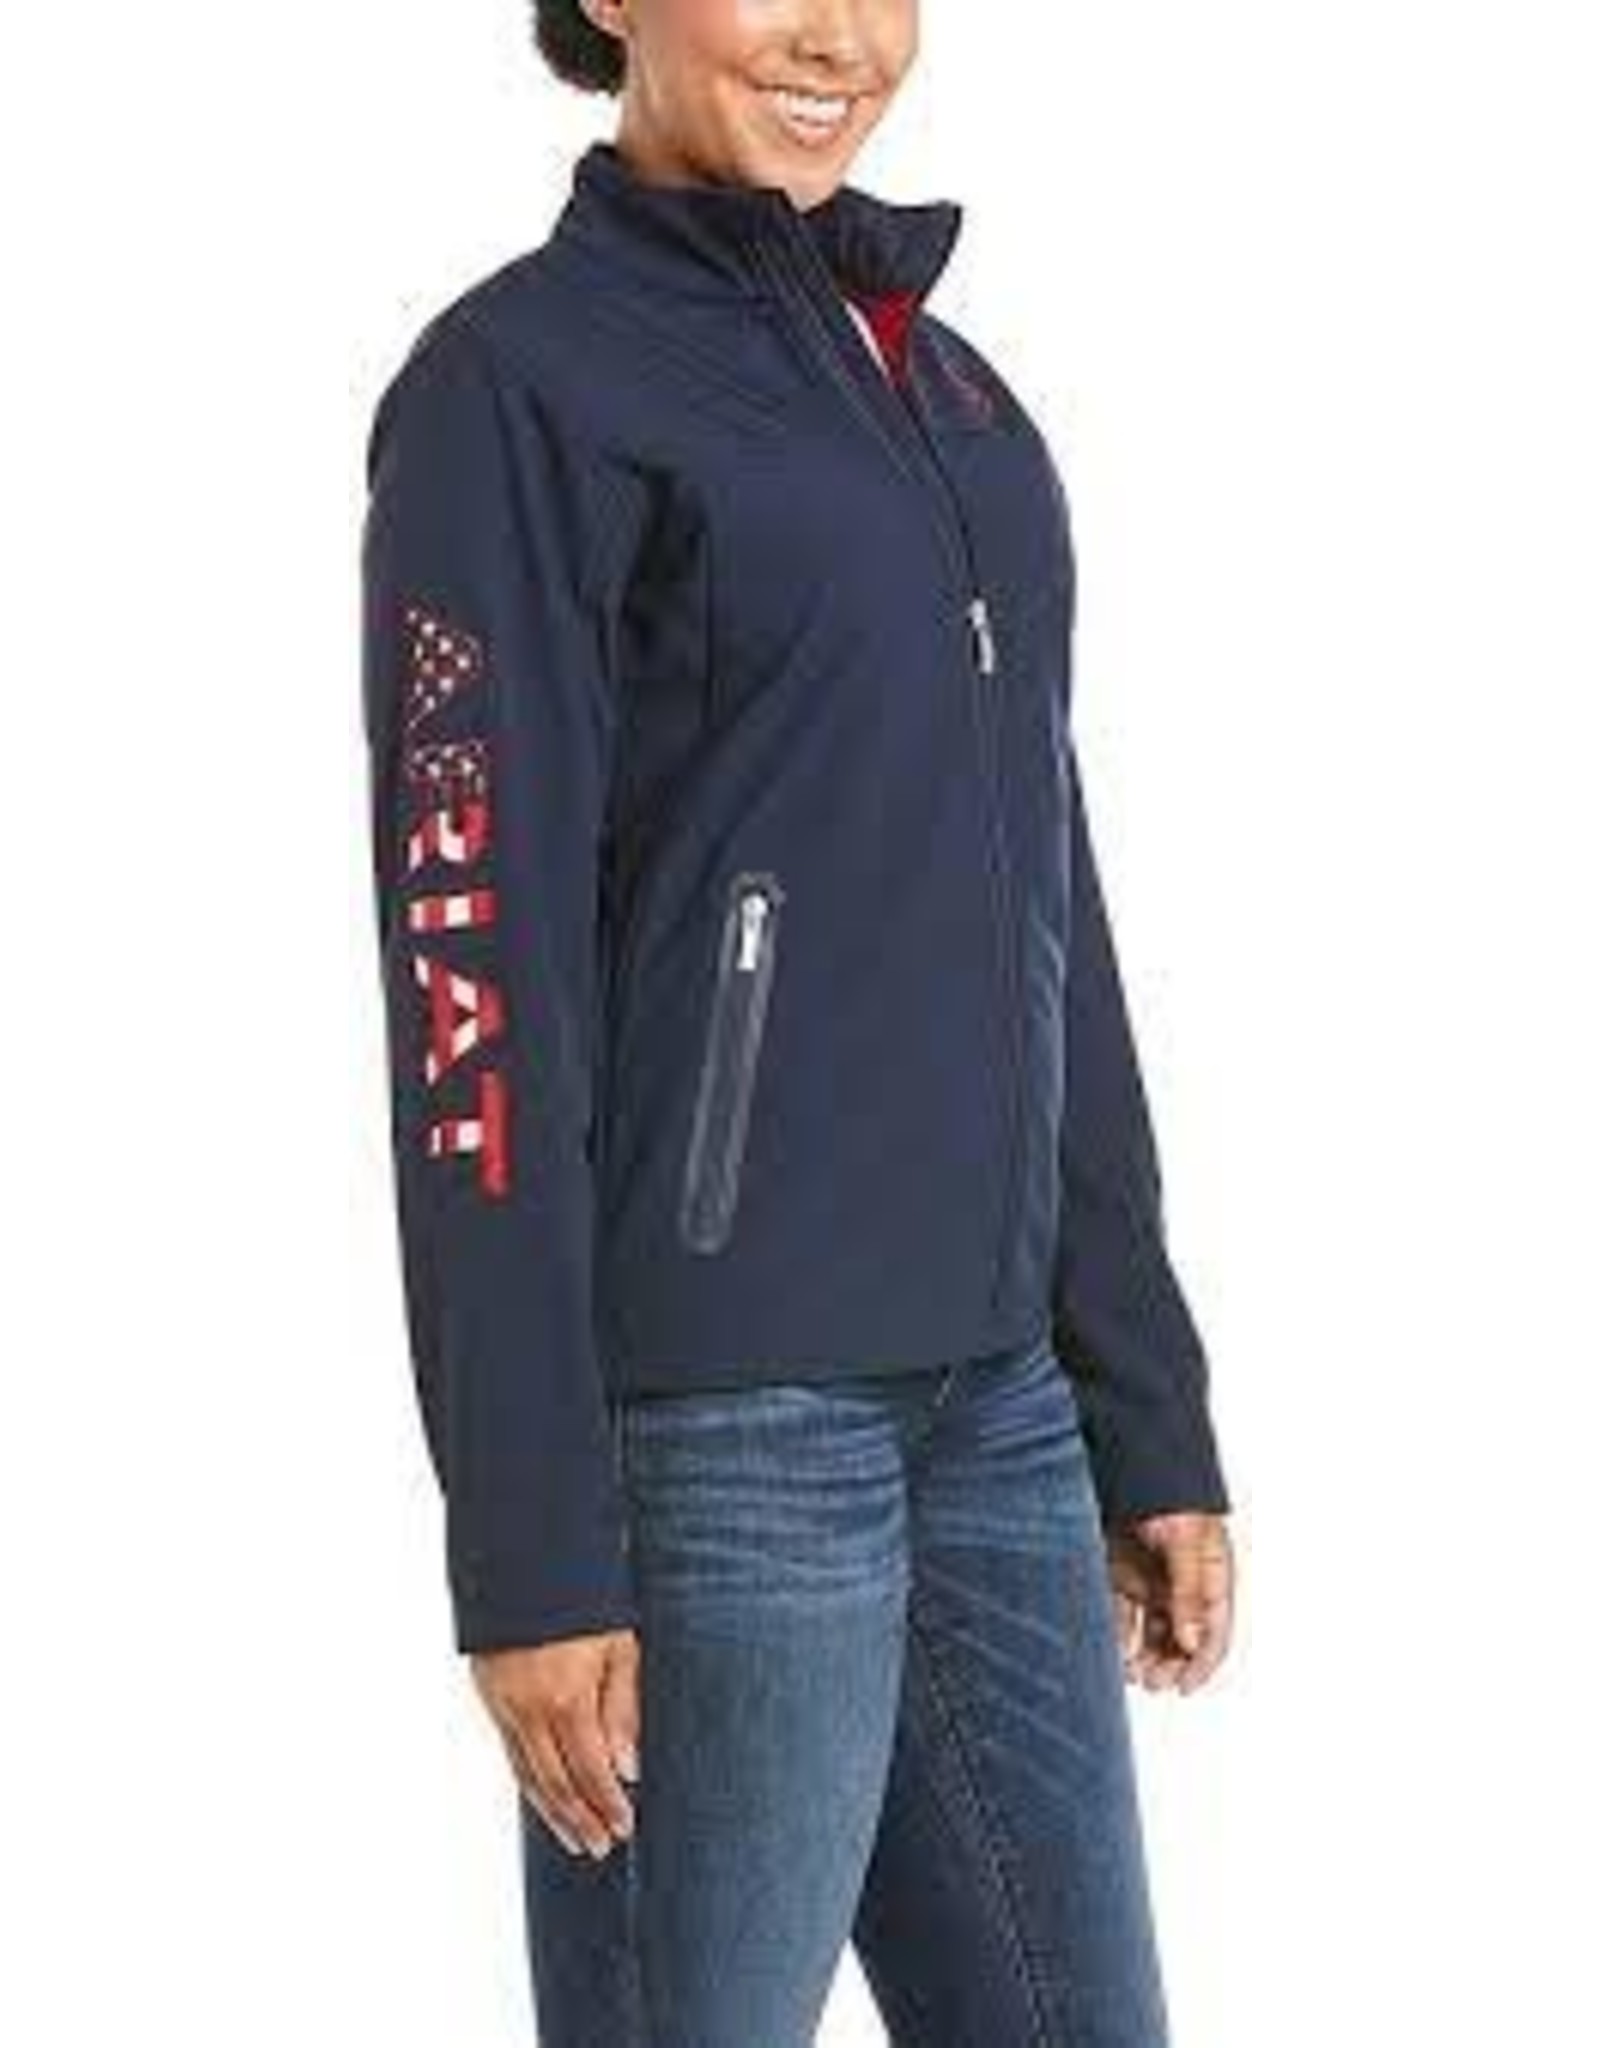 Ariat Ariat  Ladies Team USA 10028257 Navy Softshell Jacket